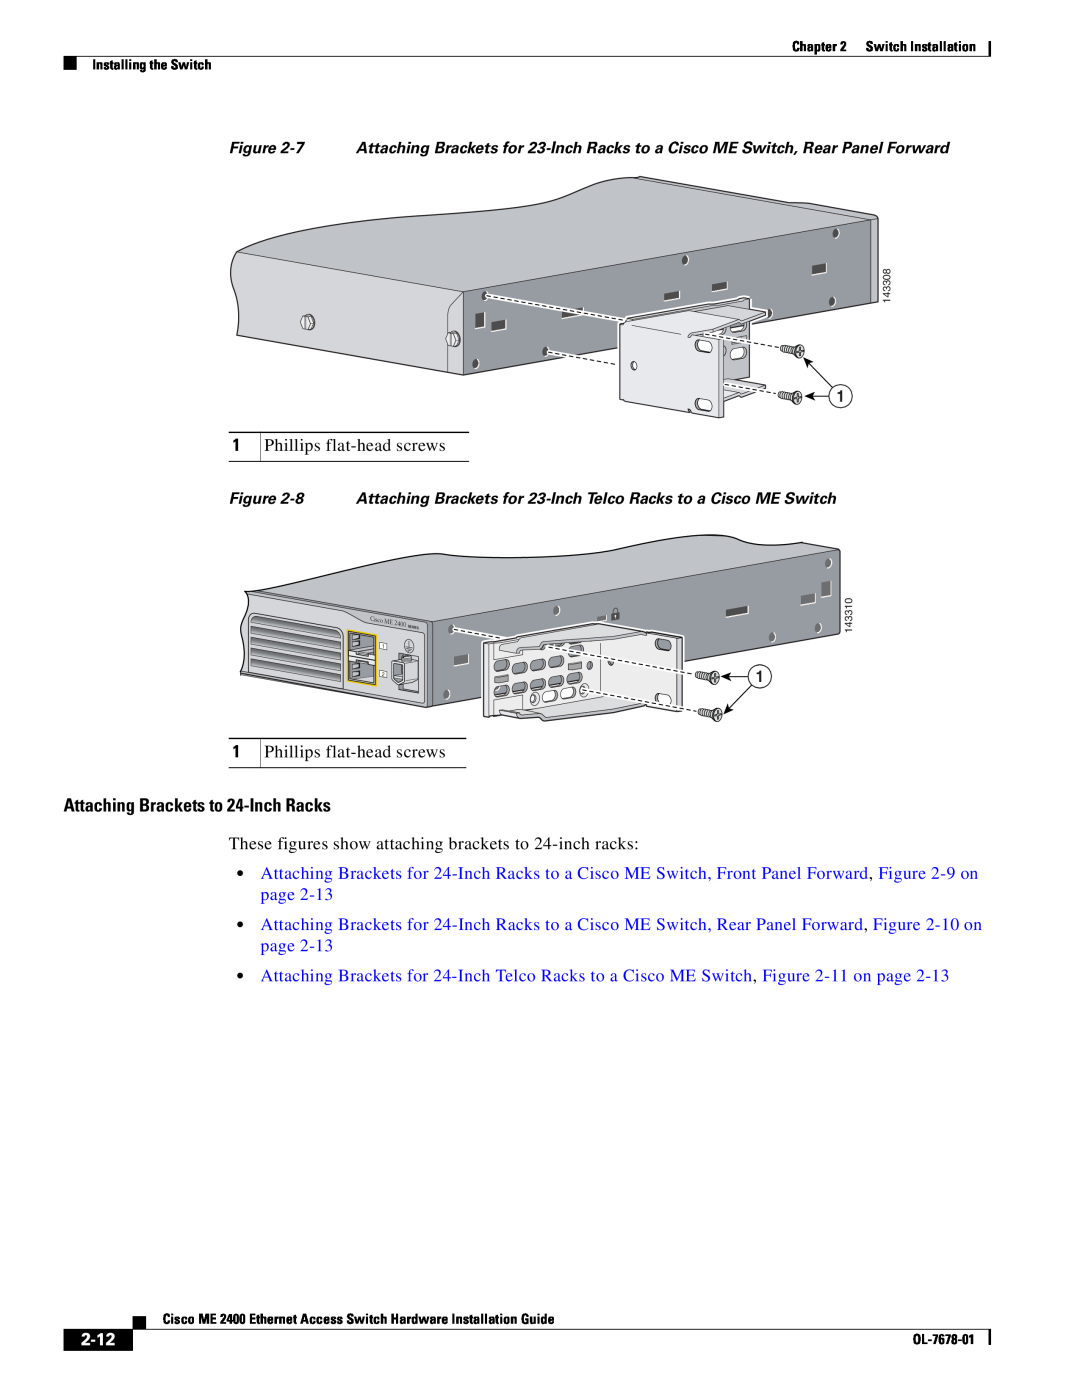 Cisco Systems ME 2400 manual Attaching Brackets to 24-Inch Racks, 2-12, Cisco 